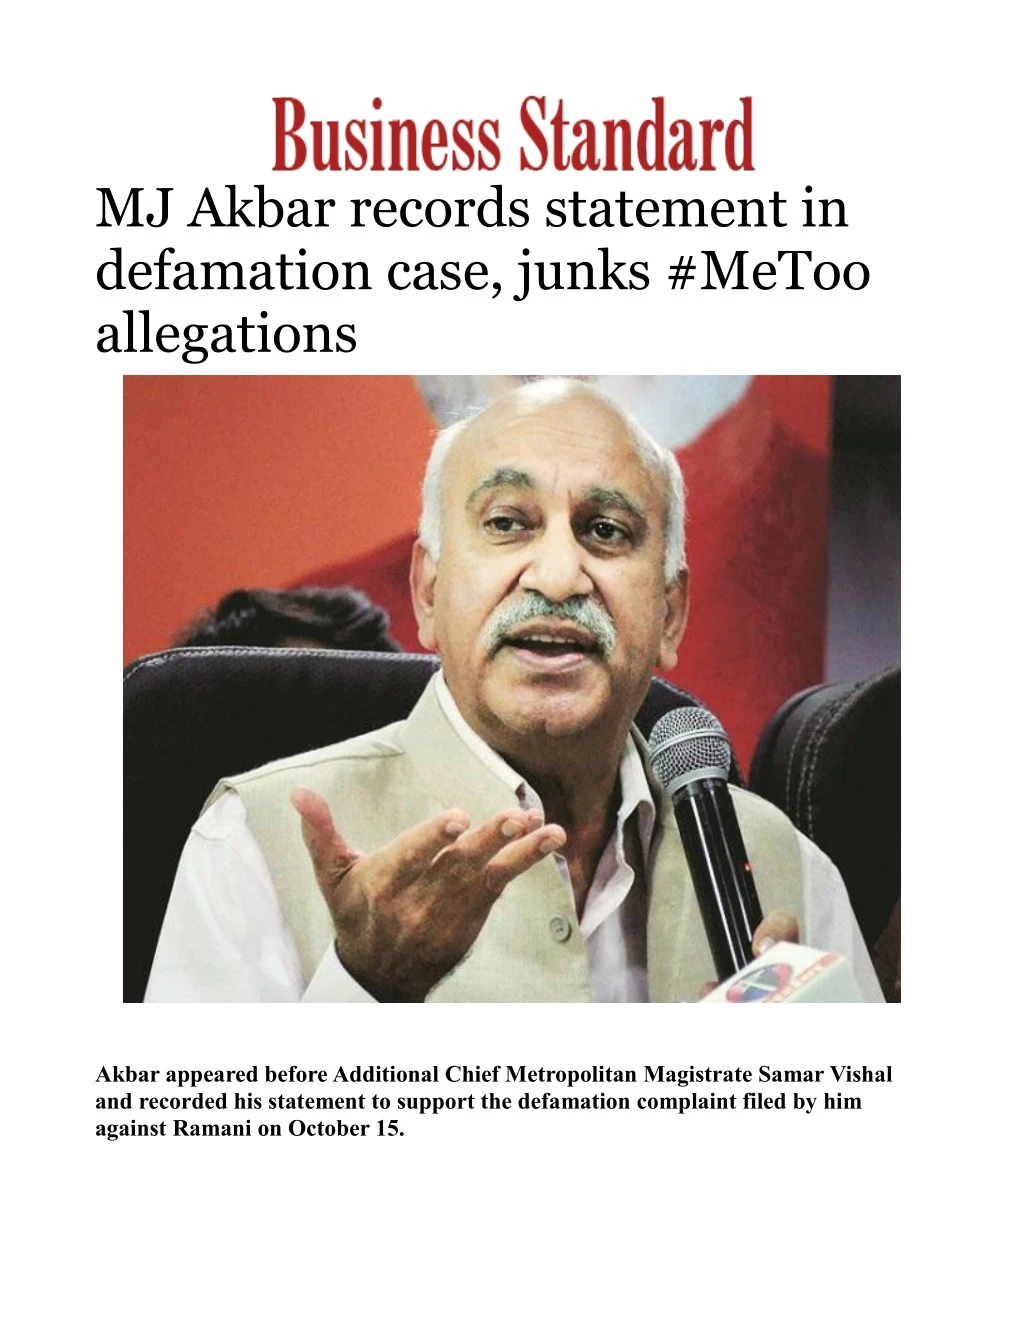 mj akbar records statement in defamation case